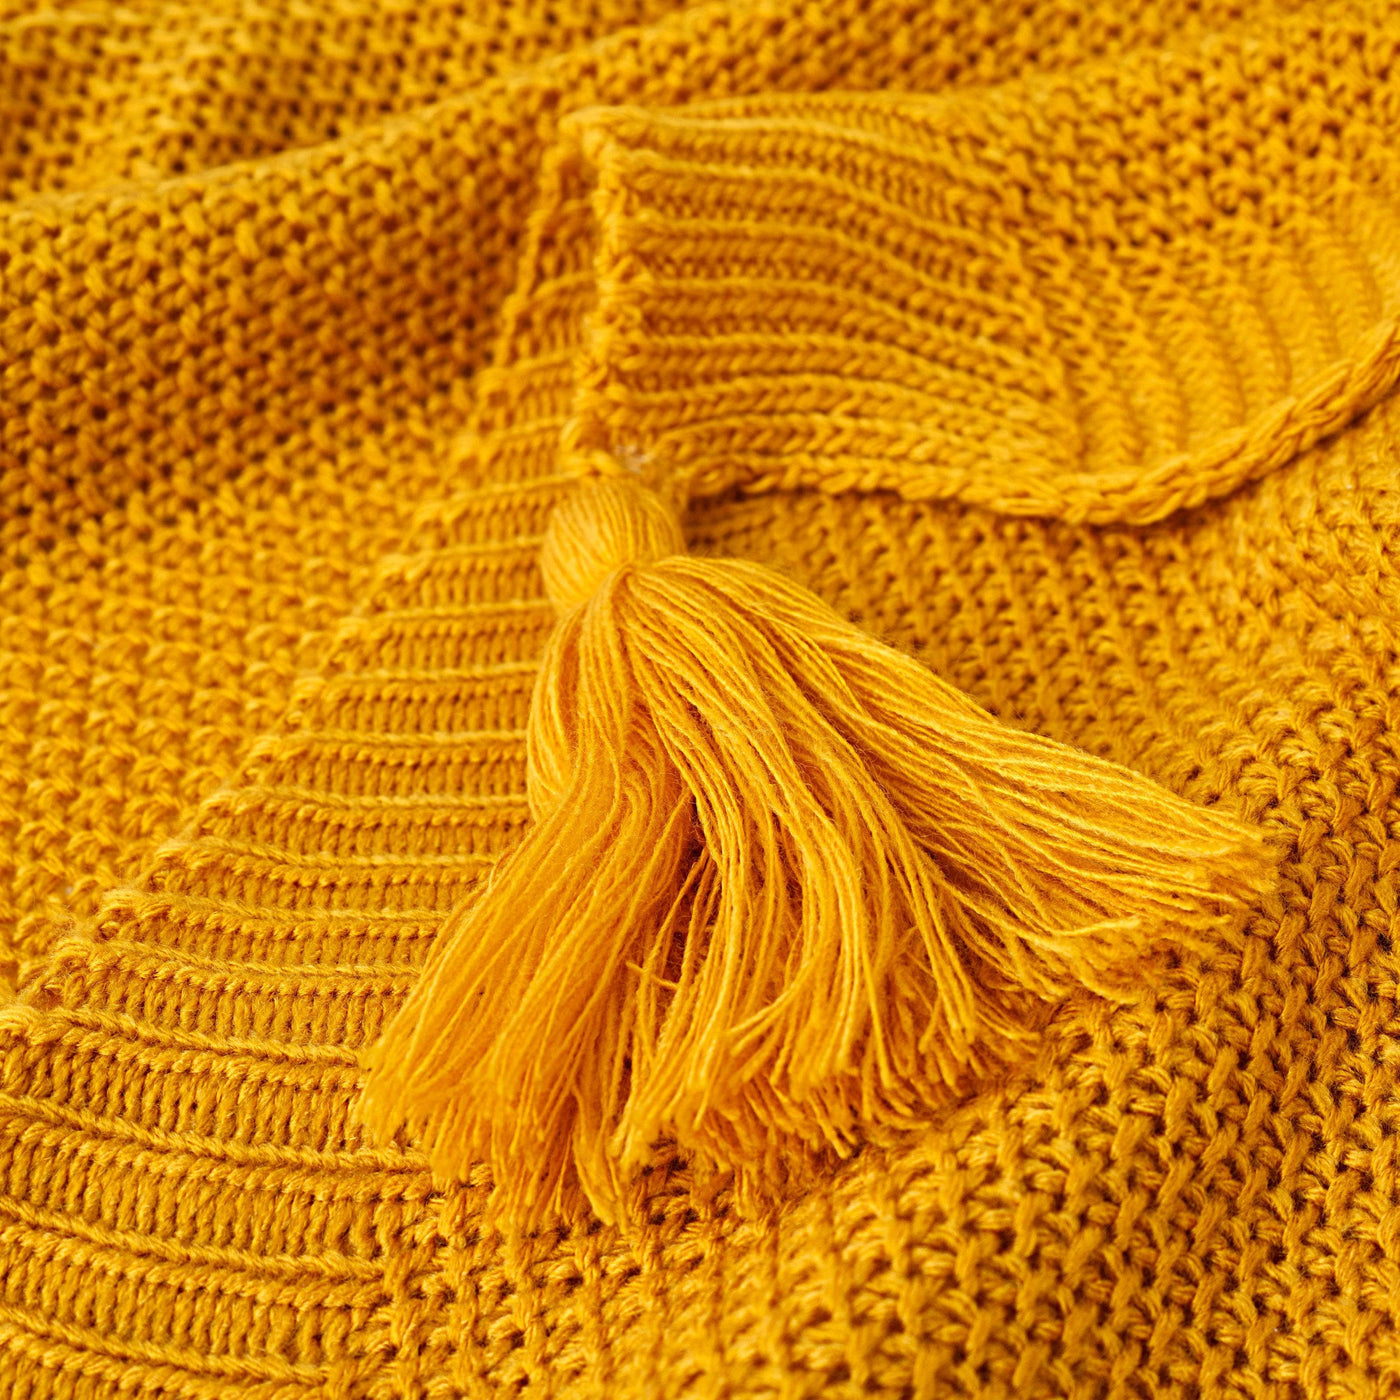 Benjamin Waffle Fringed Knitted Throw, Mustard, 125x160 cm Throws sazy.com